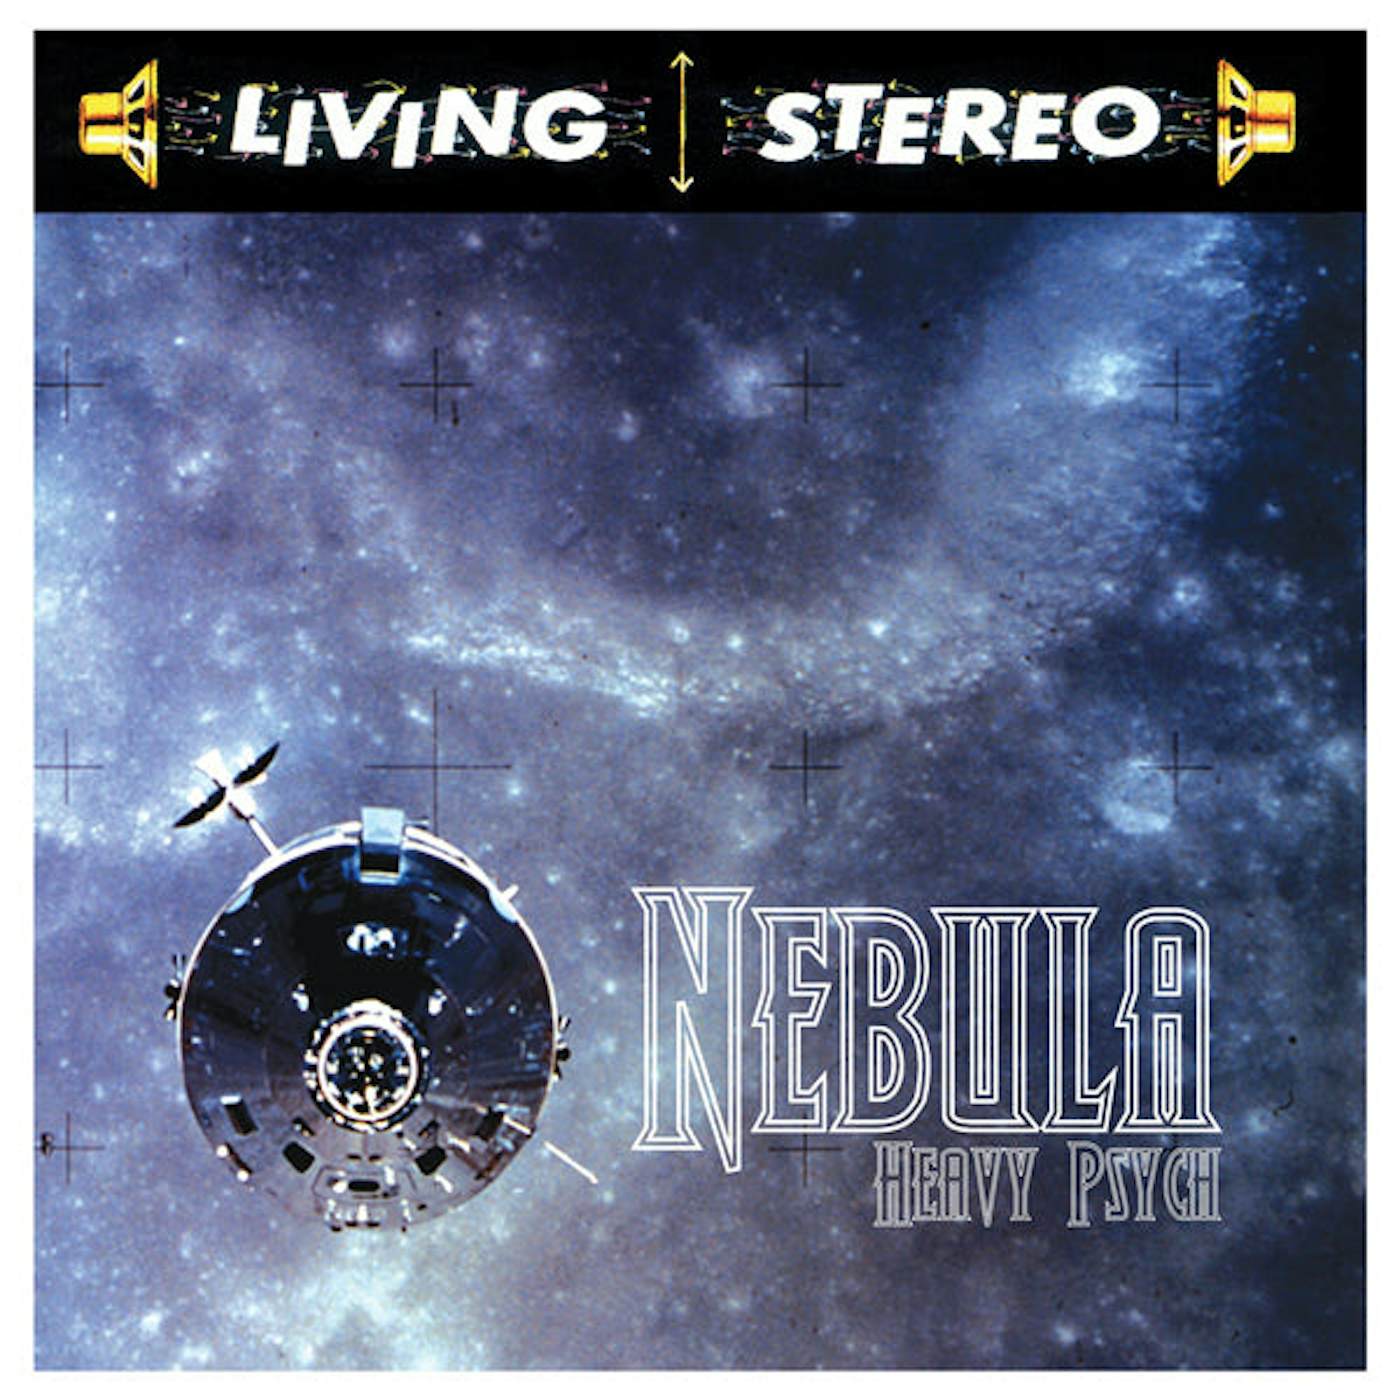 Nebula LP - Heavy Psych (Ultra Ltd Side A/B Blue / White / Black Vinyl)